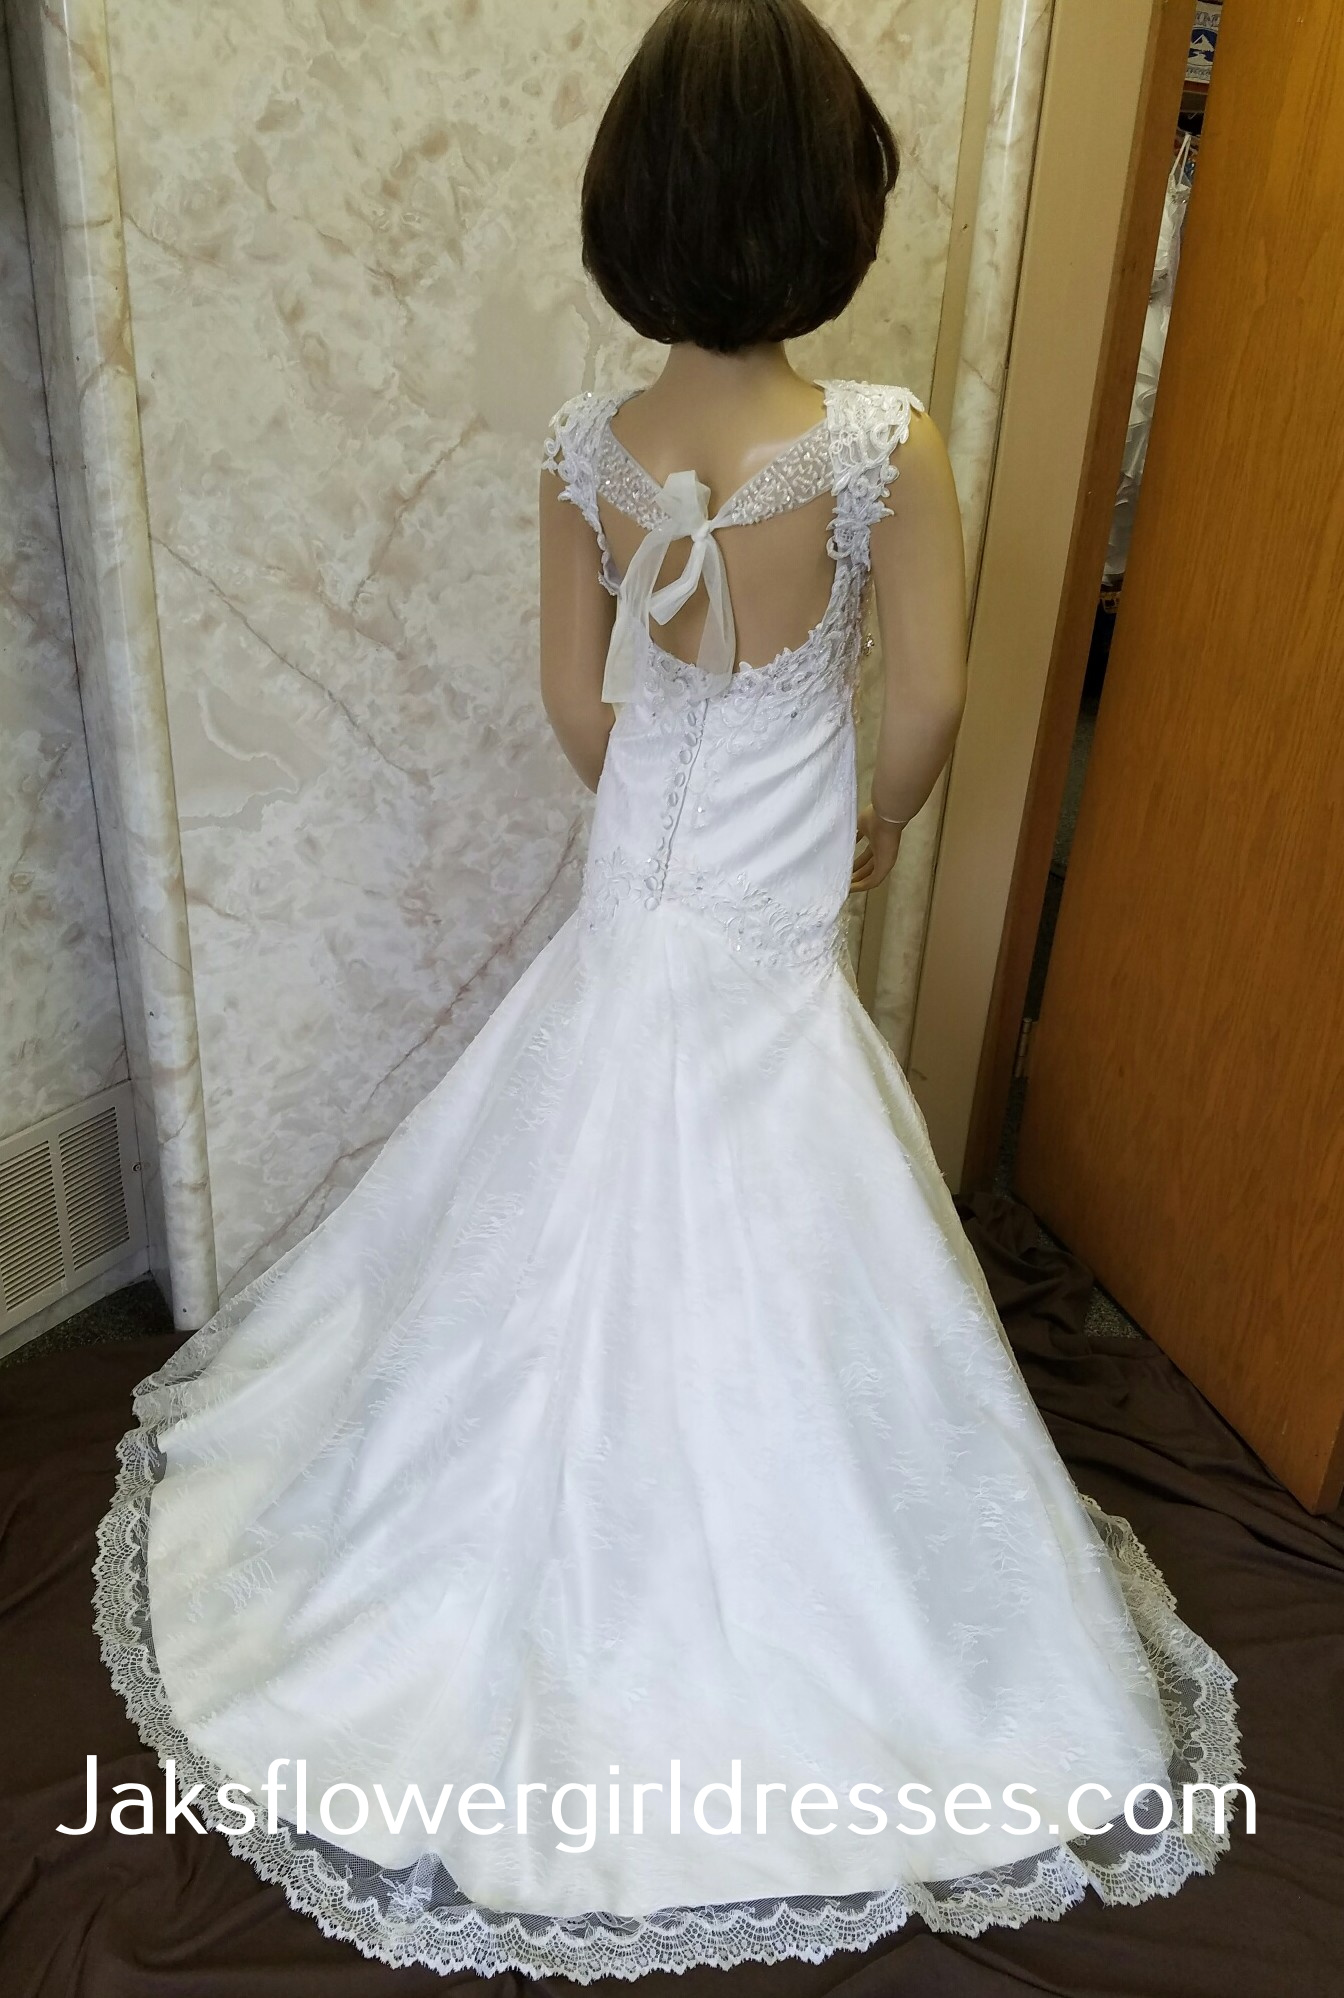 flower girl dresses matching wedding gown